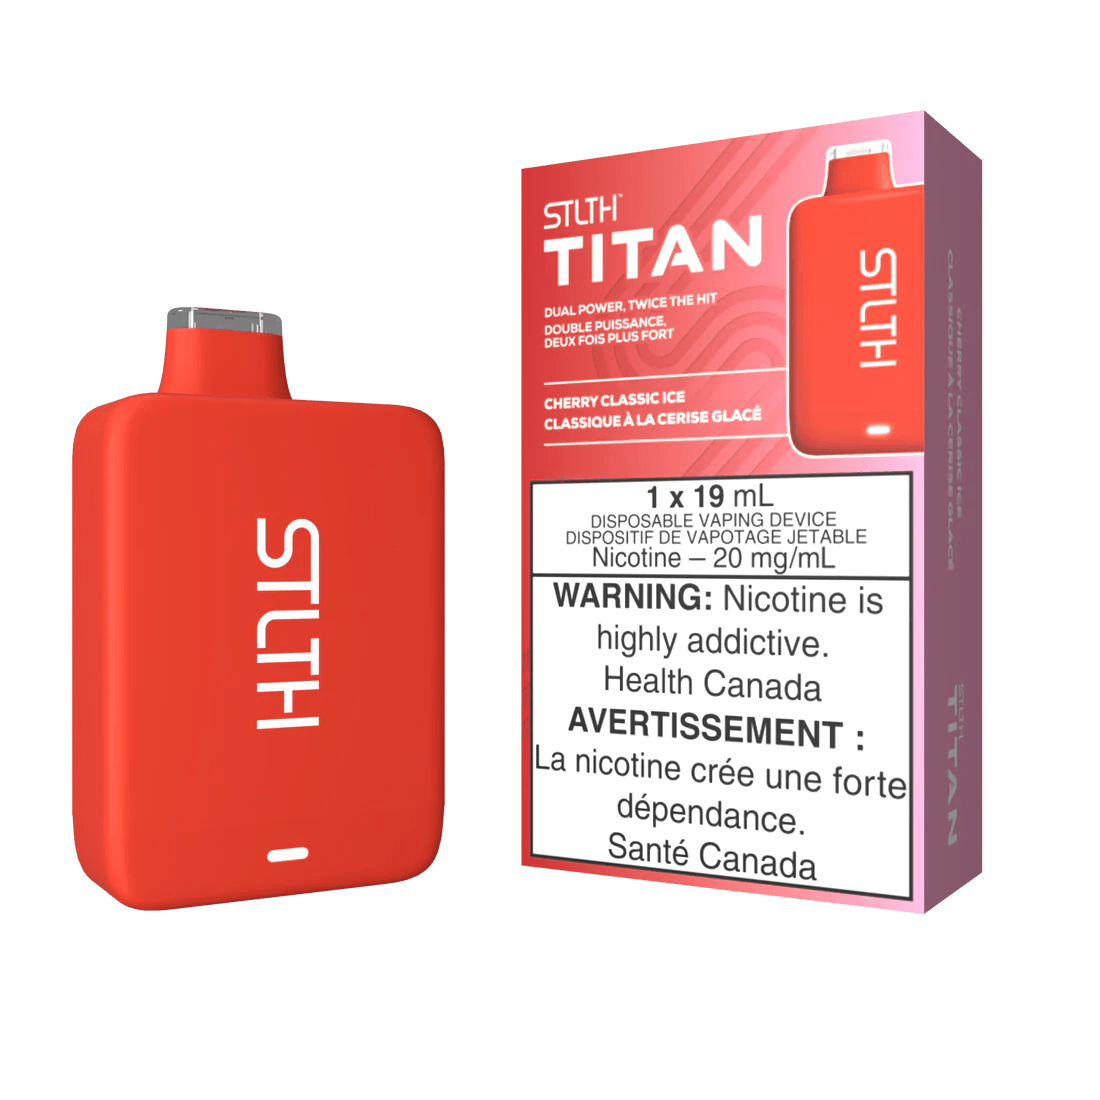 STLTH Titan - Cherry Classic Ice - Vapor Shoppe